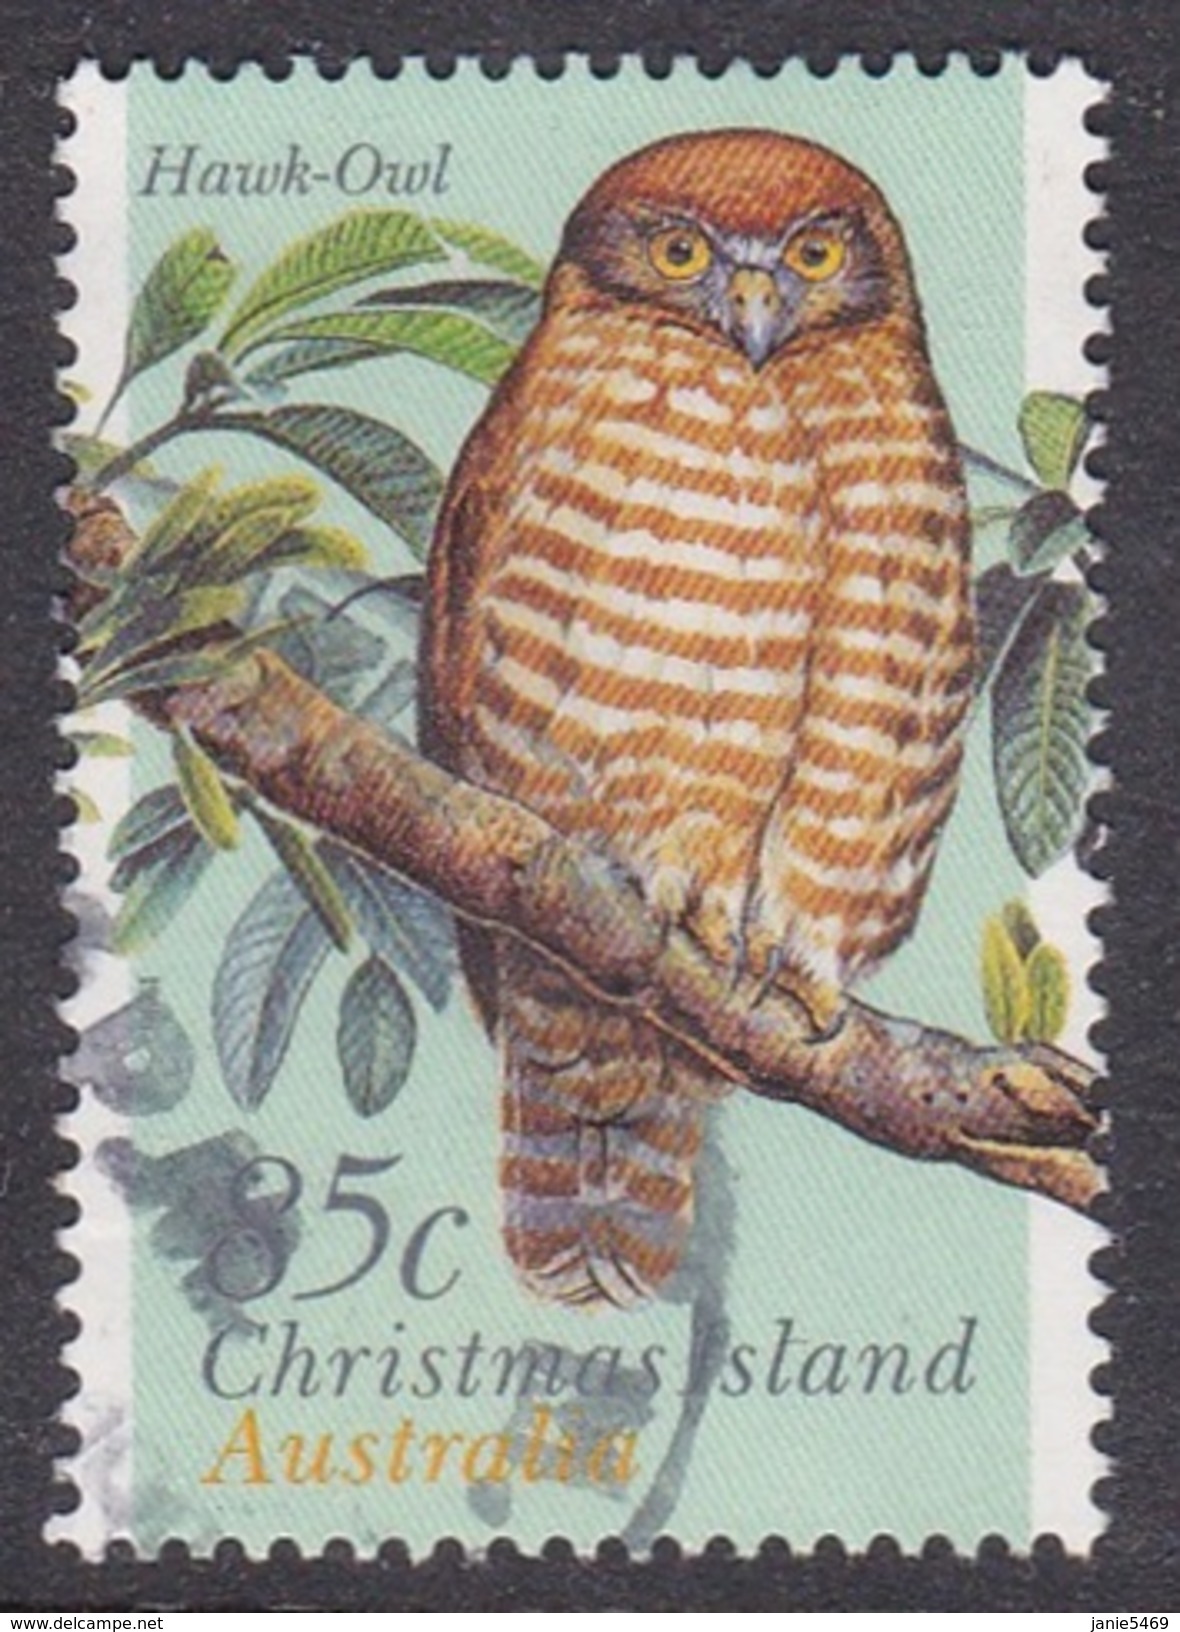 Christmas Island ASC 390 1996 Land Birds 85c Hawk-Owl Used - Christmas Island